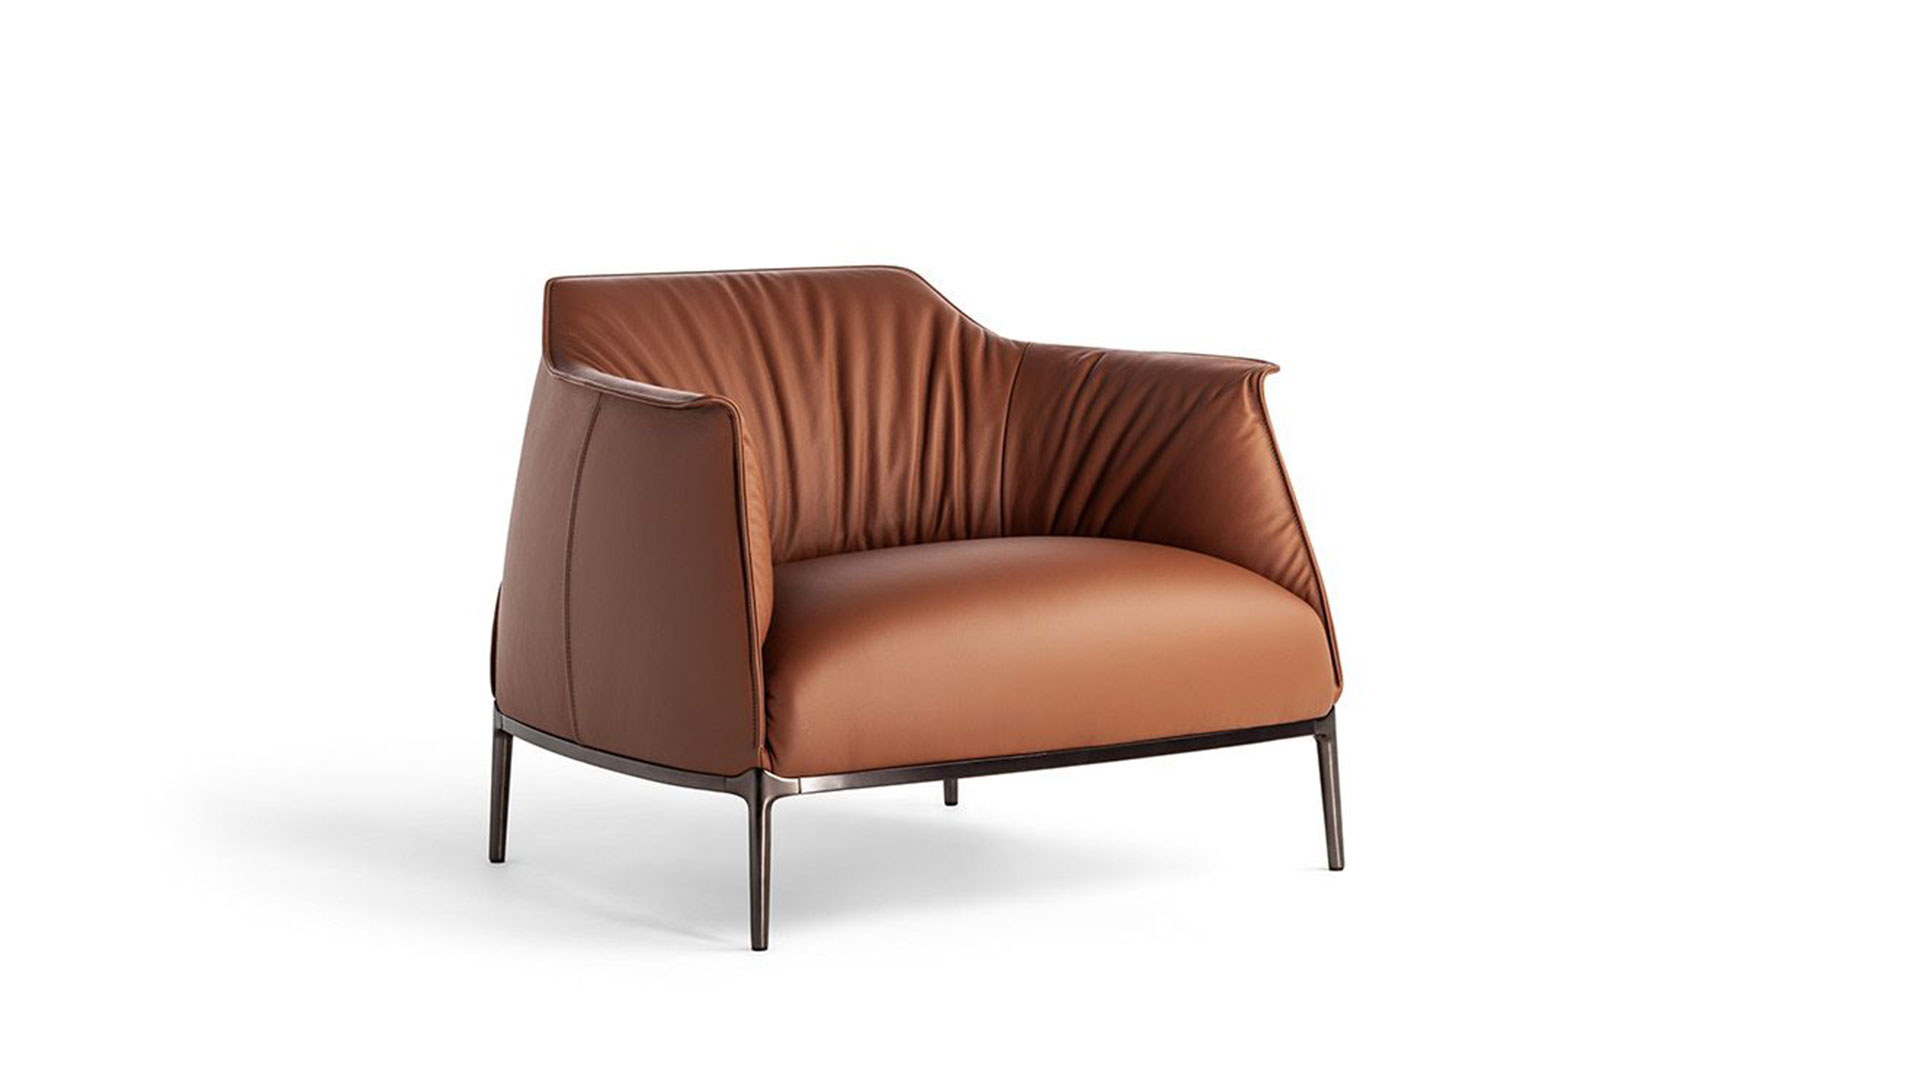 Poltrona Frau Archibald: The Pinnacle of Luxury Seating Design插图4